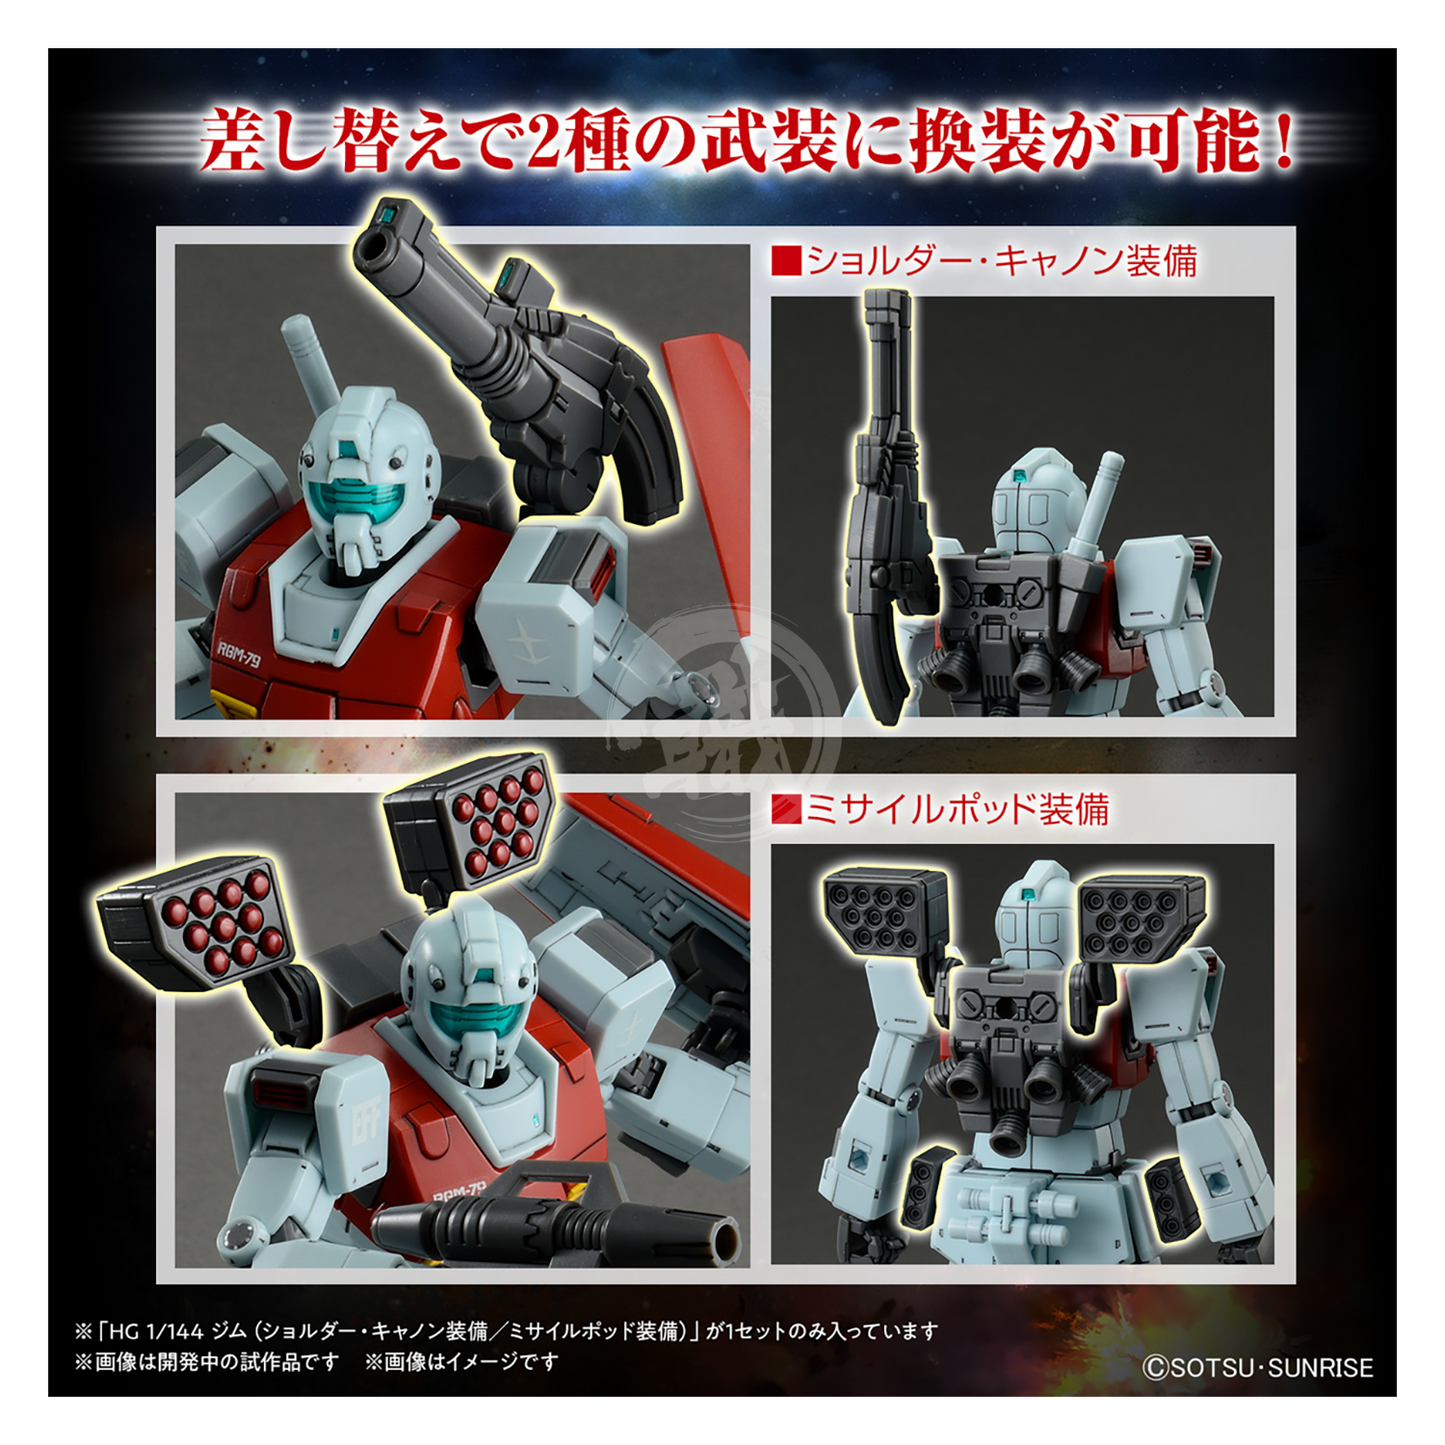 Bandai - HG GM [Shoulder Cannon Equipped/Missile Pod Equipped] - ShokuninGunpla